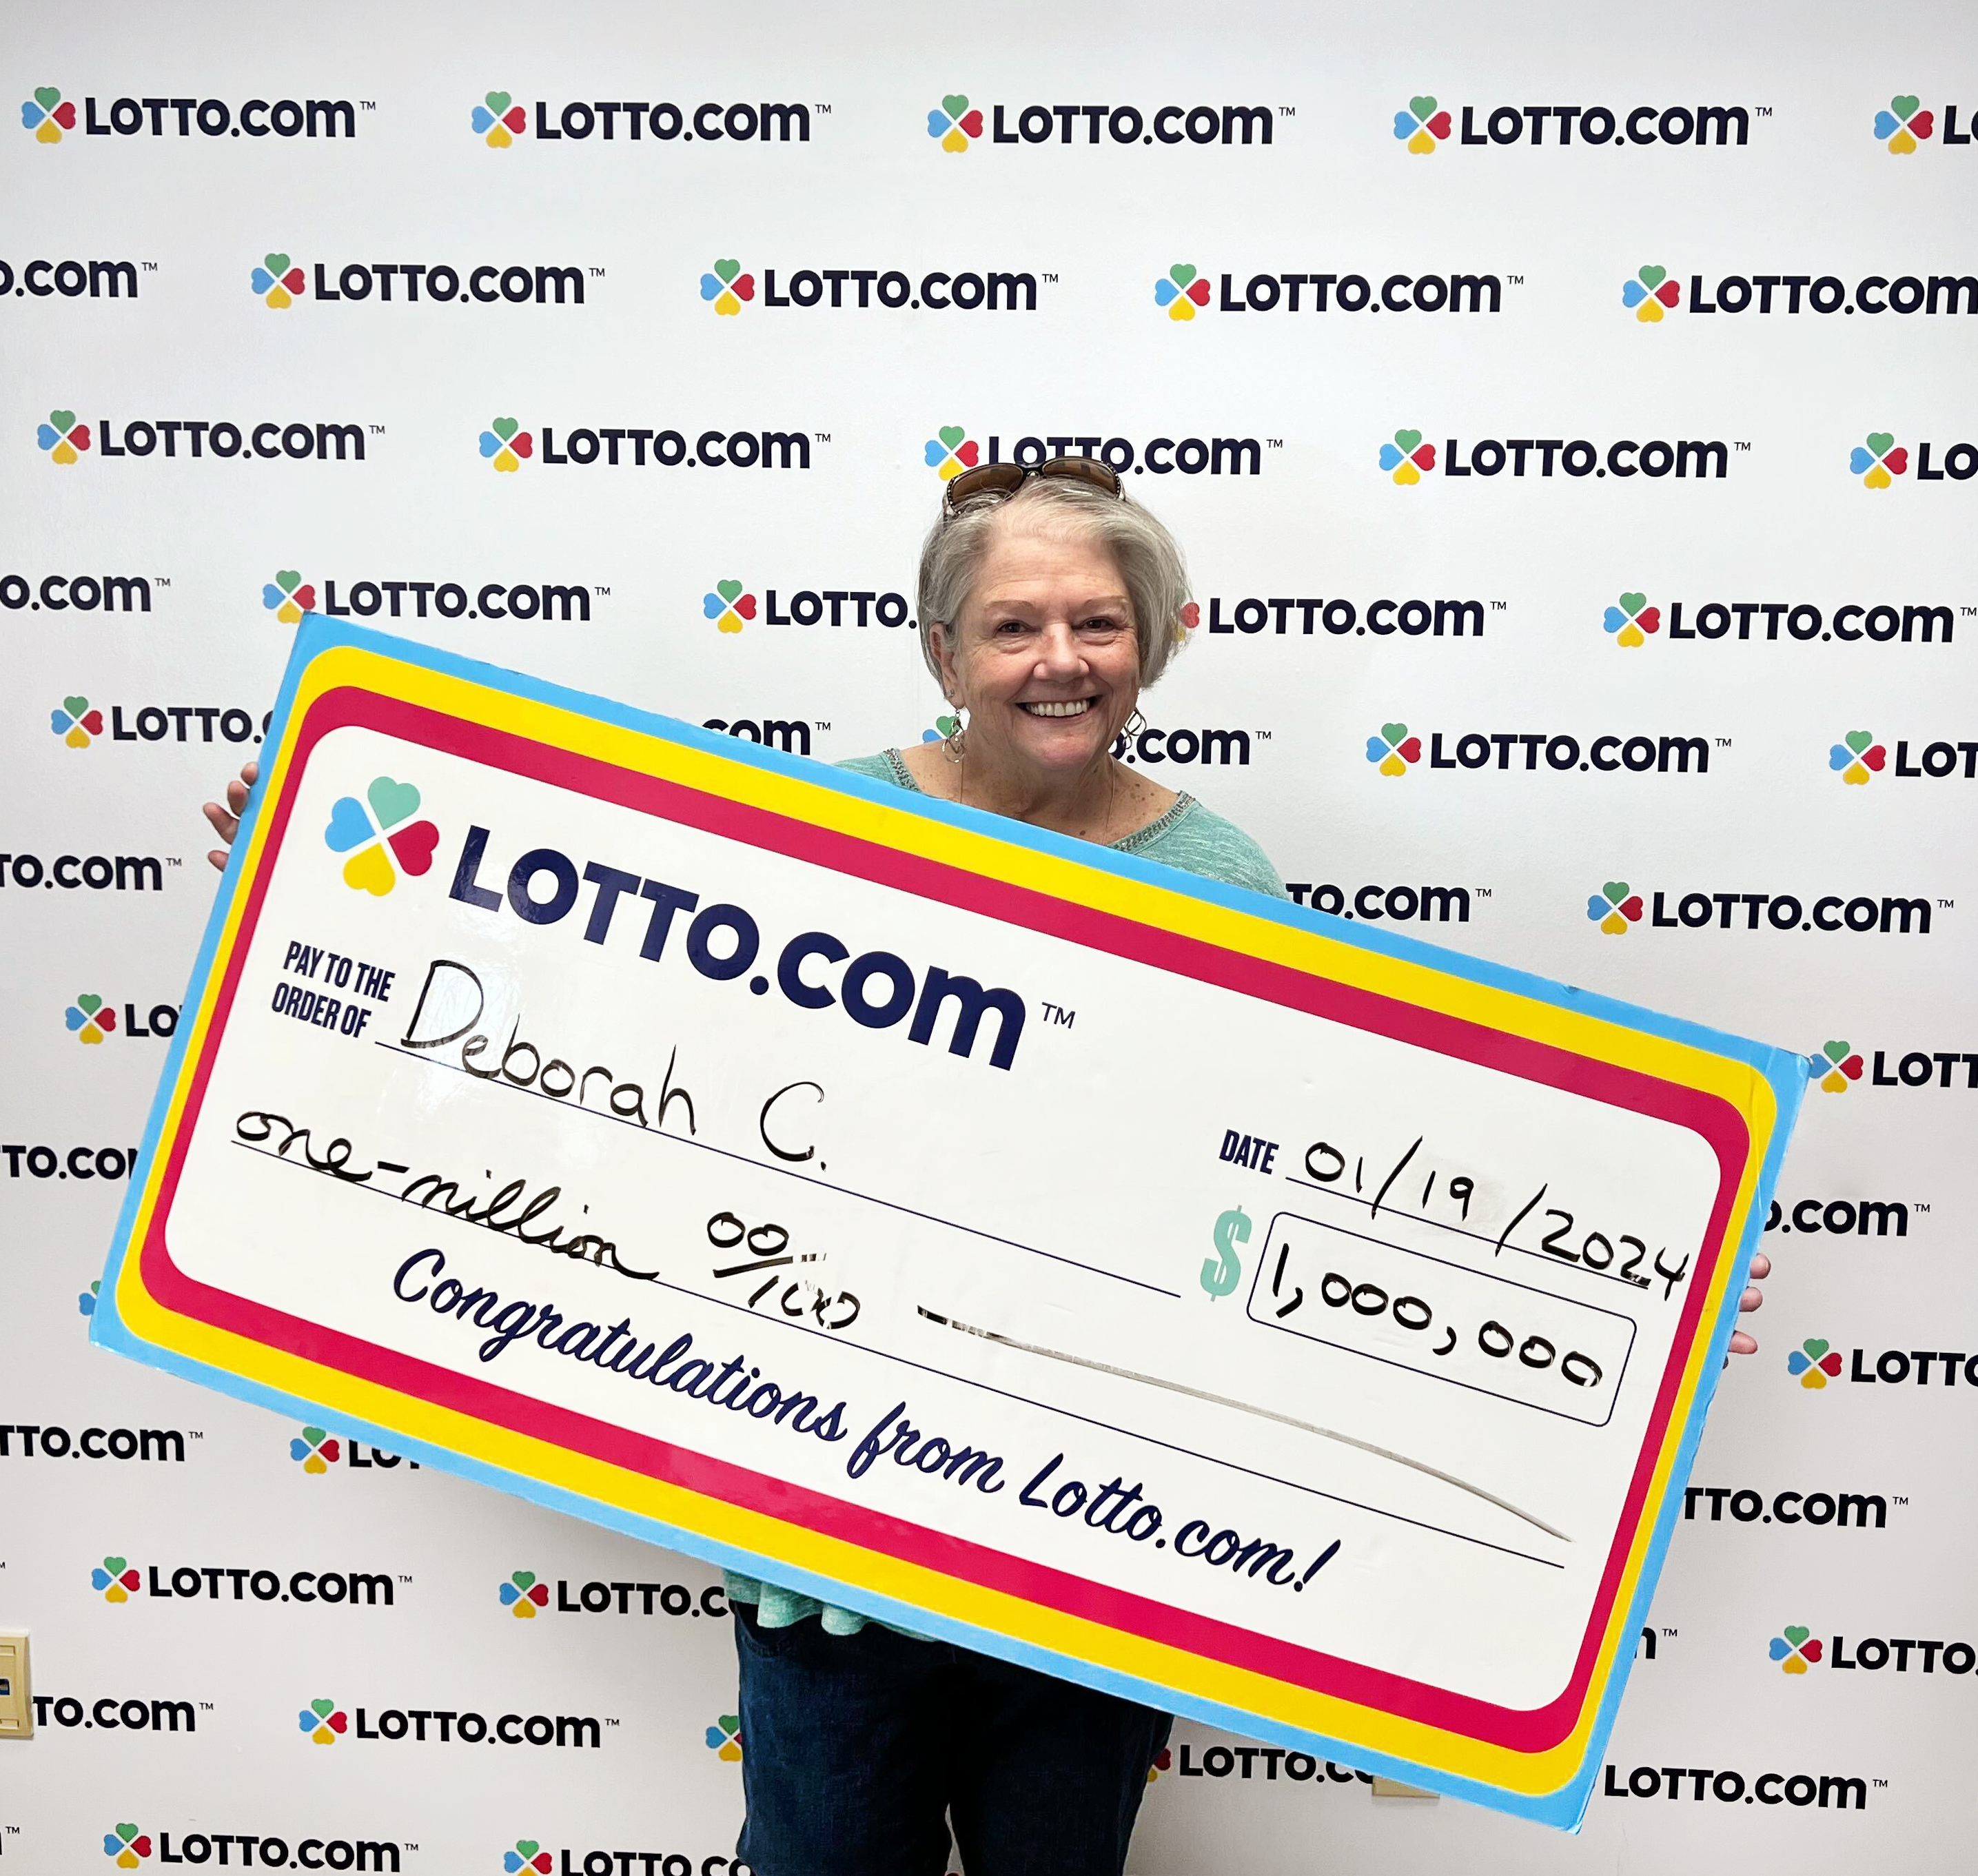 multimedia-update-–-texas-customer-wins-$1-million-with-winning-digital-scratch-ticket-on-lotto.com